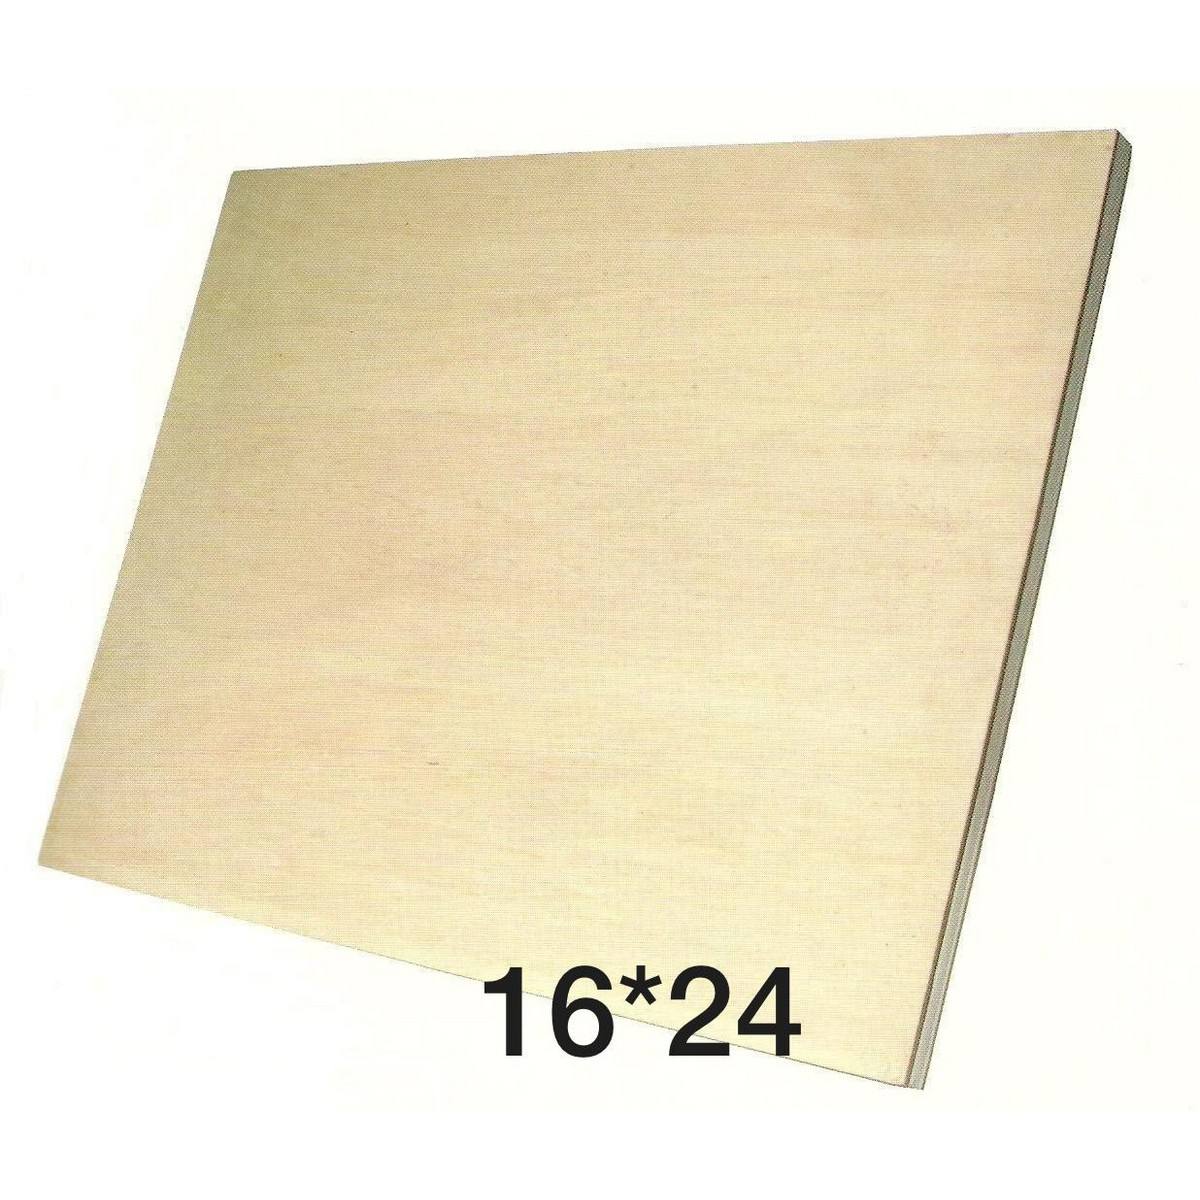 Blick Sketch Pad Board Replacement Rubber Band, Pkg Of 2, 8 X 1/4 |  forum.iktva.sa